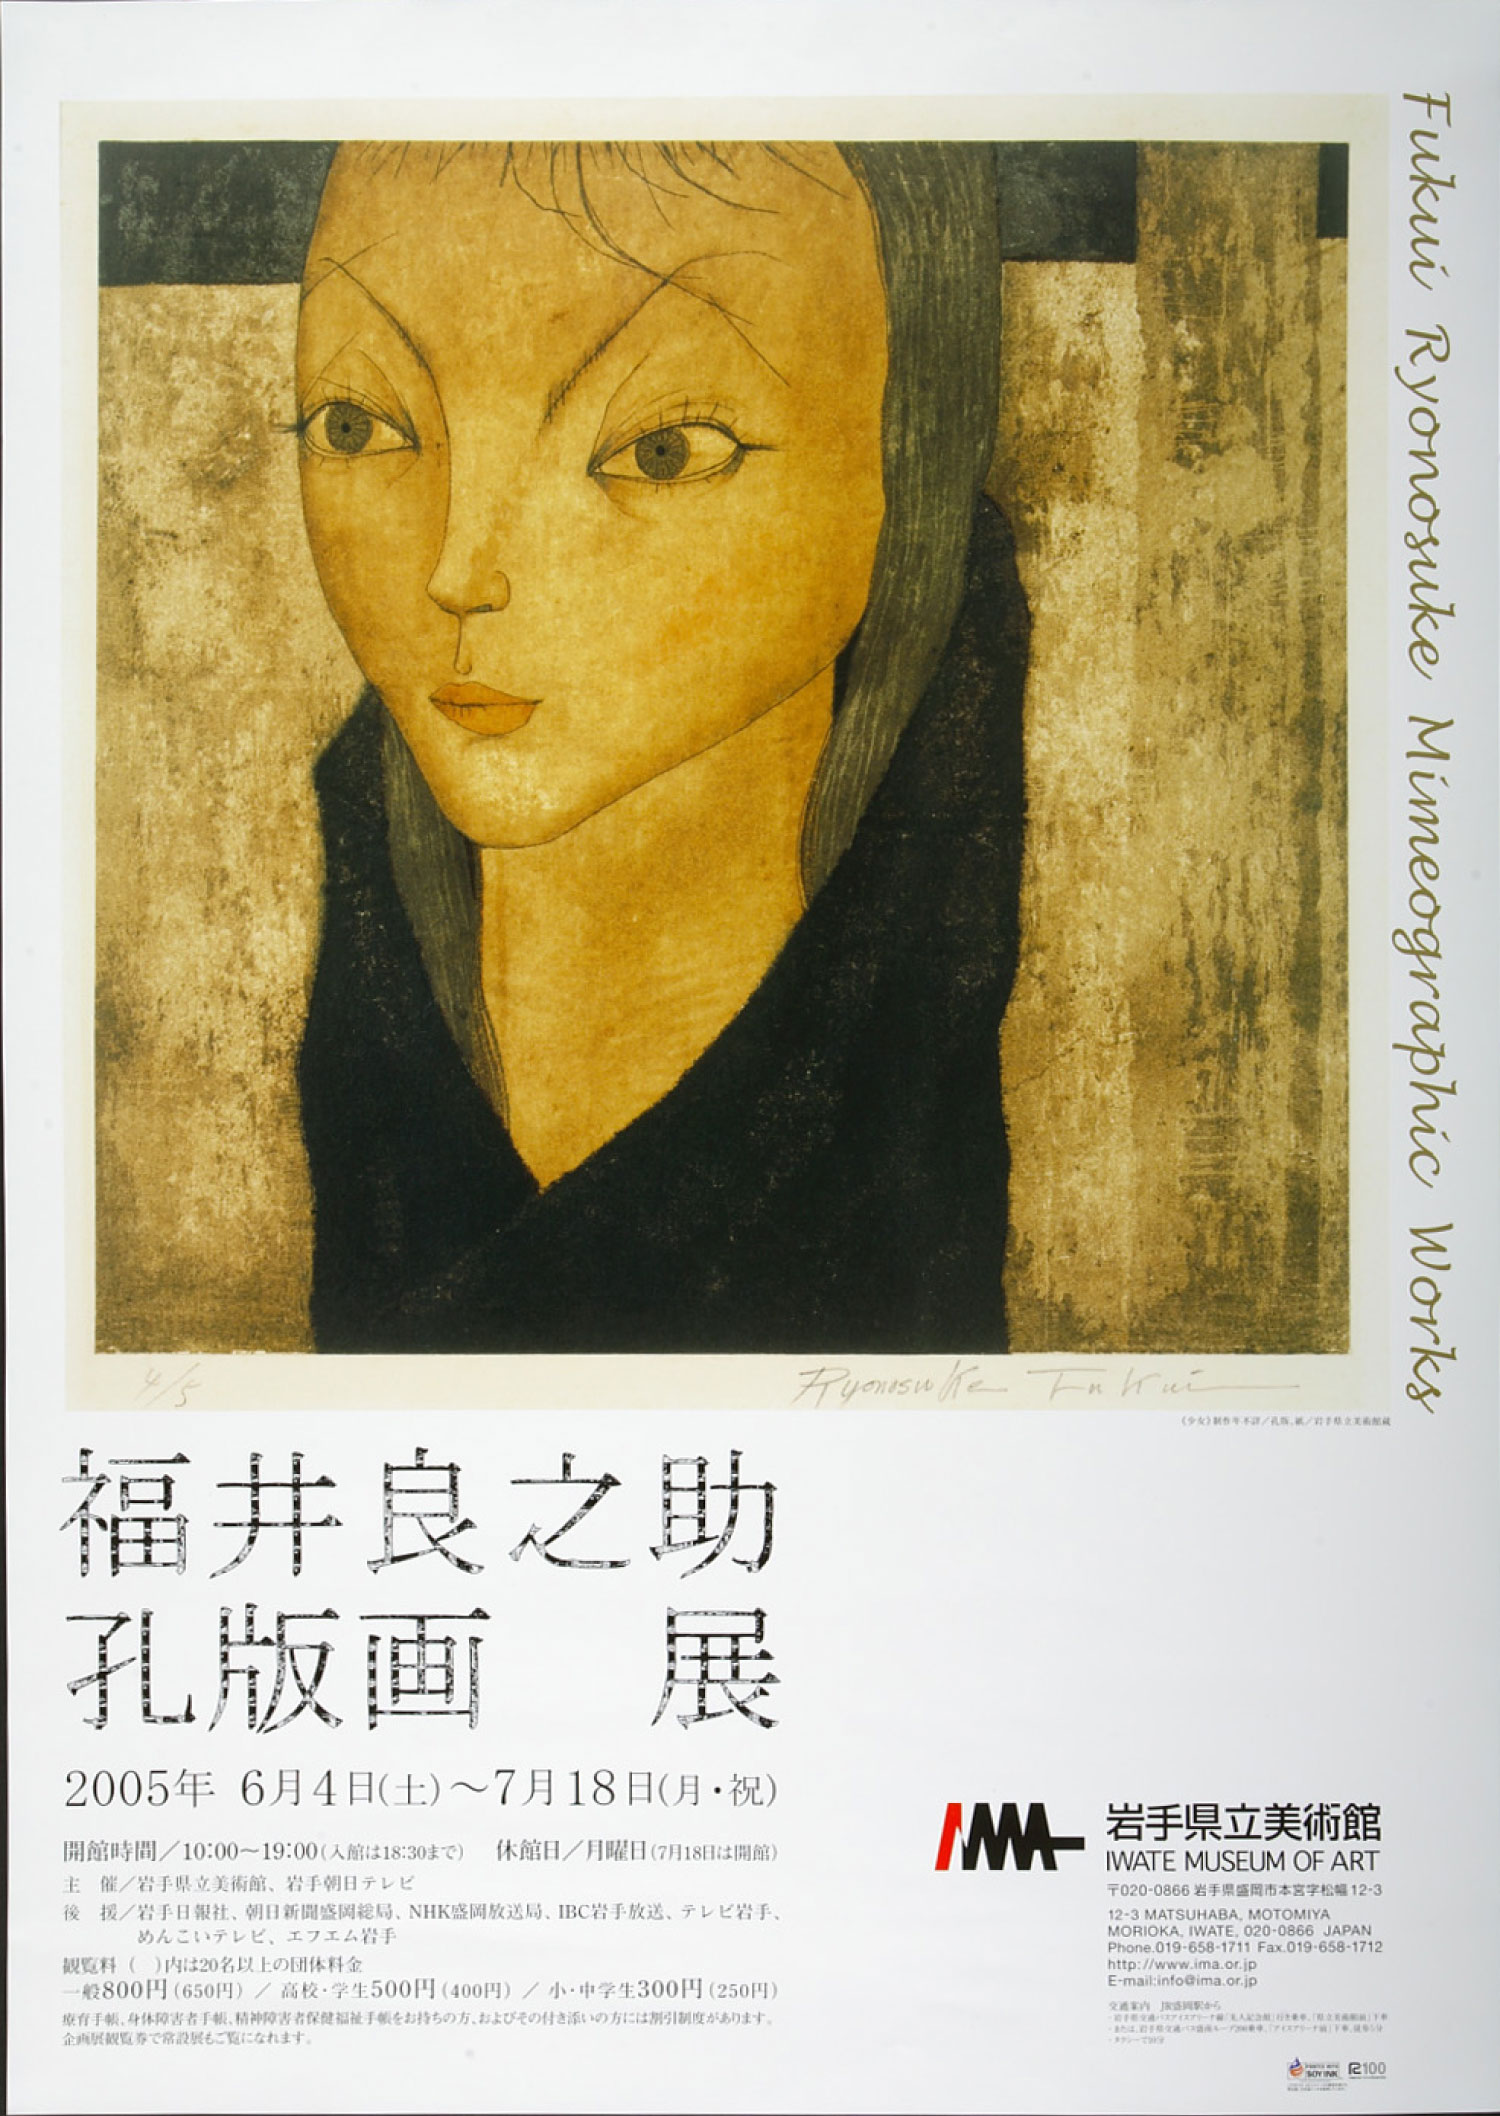 Iwate Musium of Art Ryonosuke FUKUI Mimeographic works